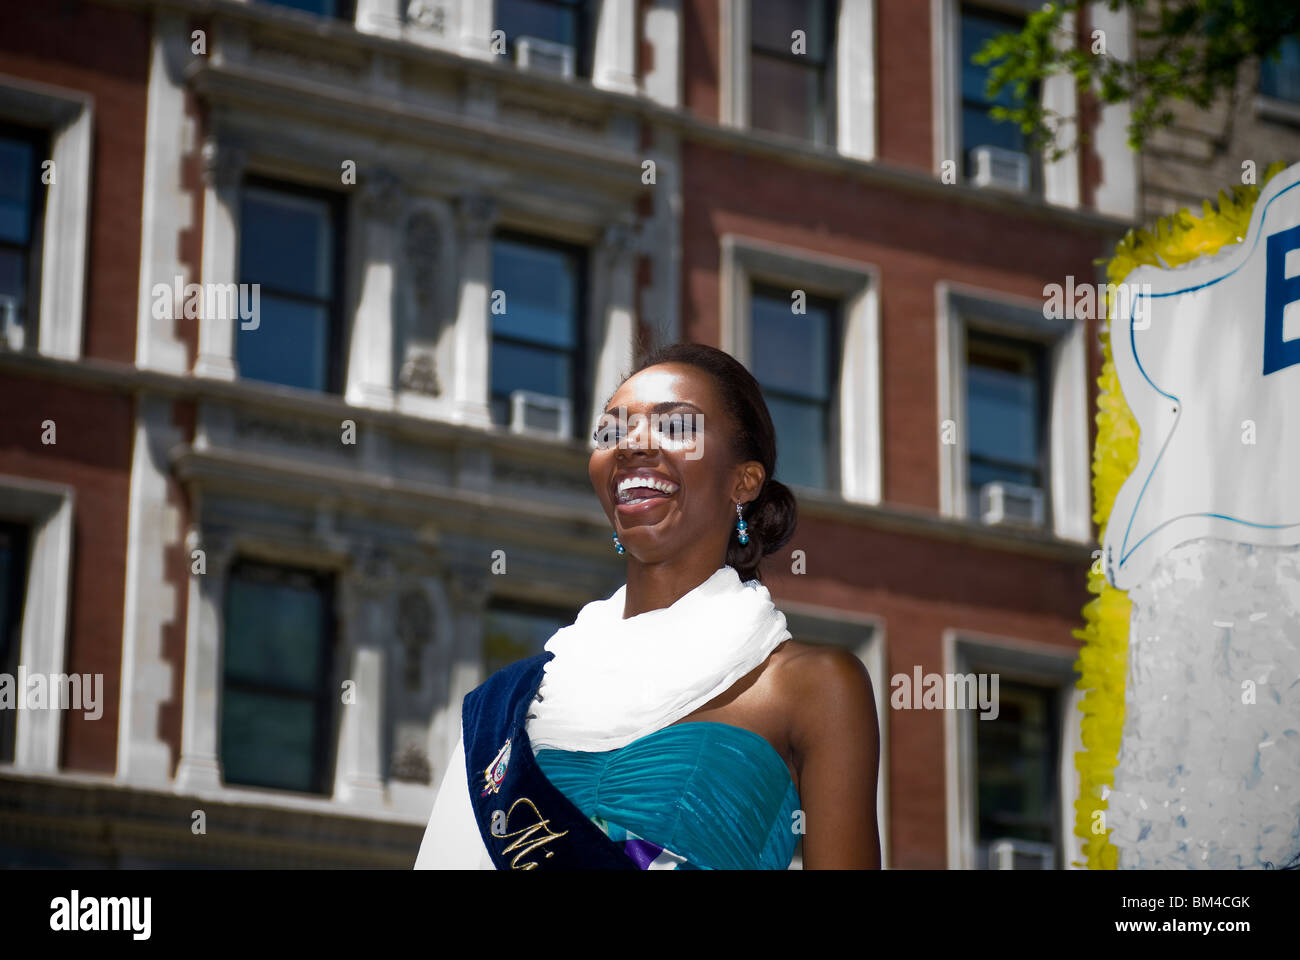 Miss Ecuador, Lady Mina, 23 aus Guayaquil an der ecuadorianischen Parade am Central Park West in New York Stockfoto